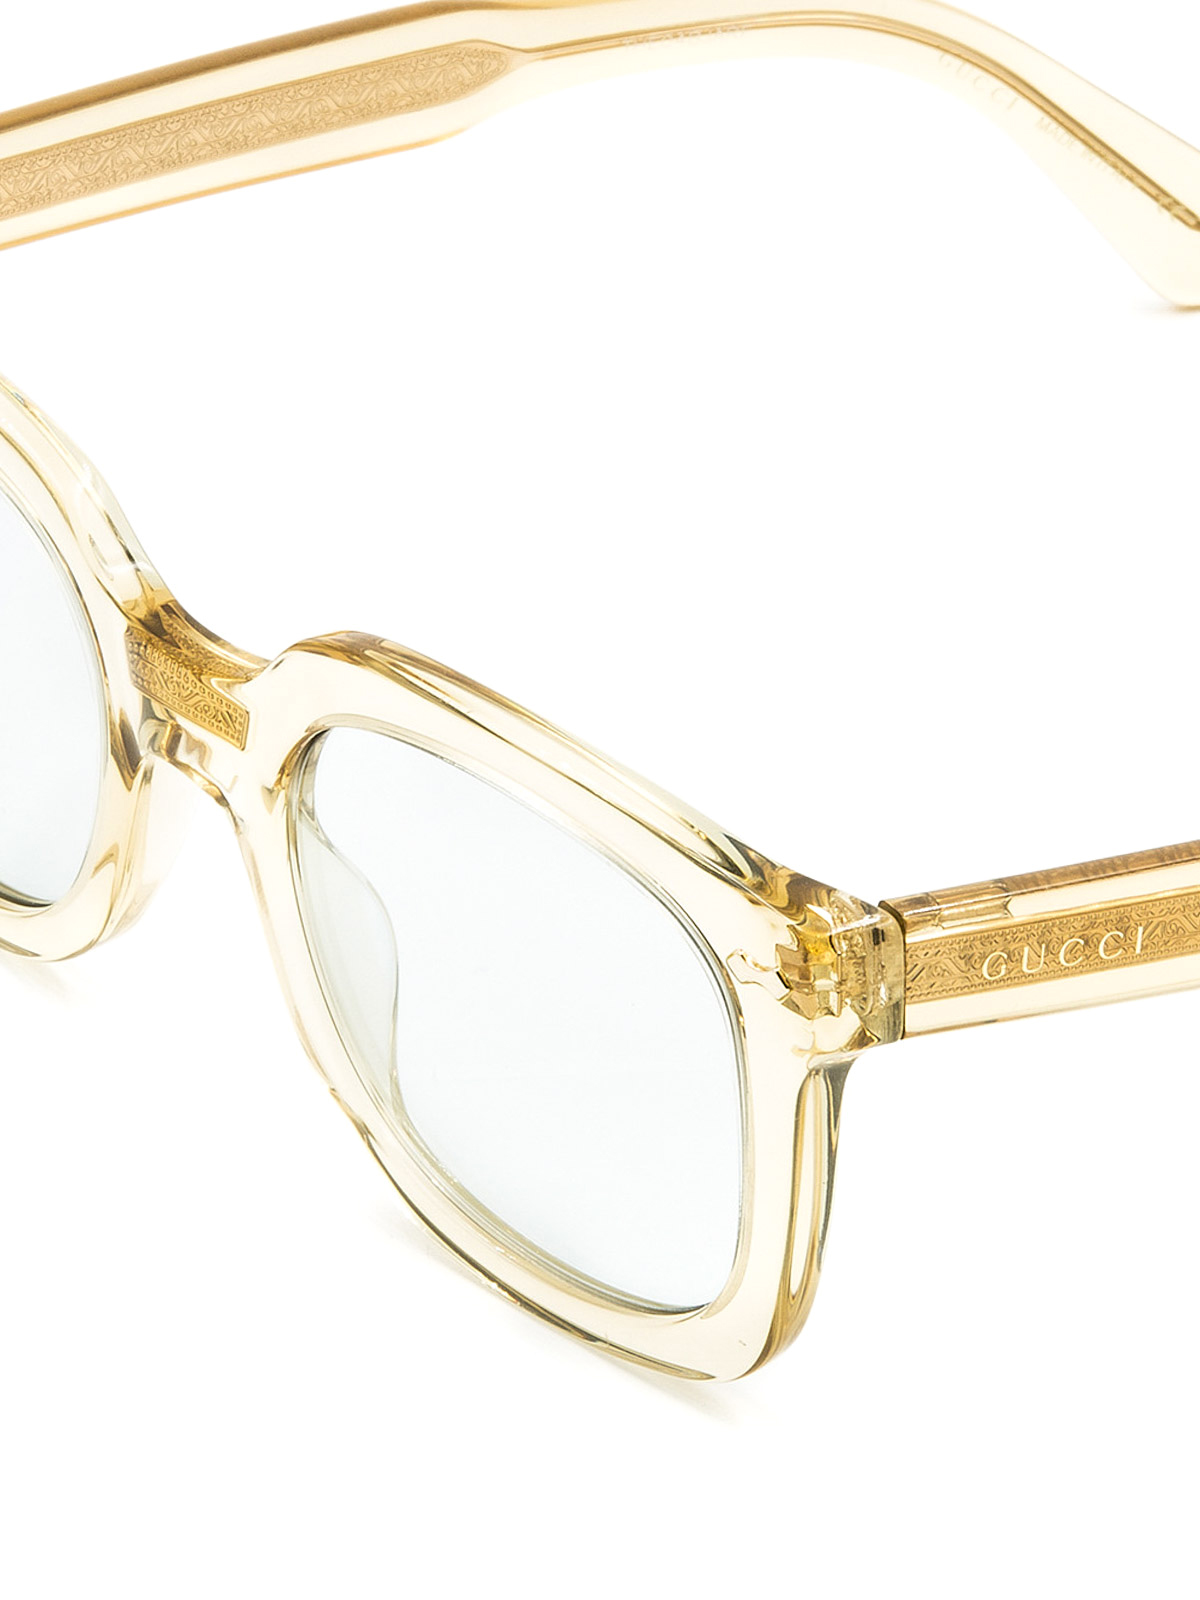 gucci sunglasses clear frame